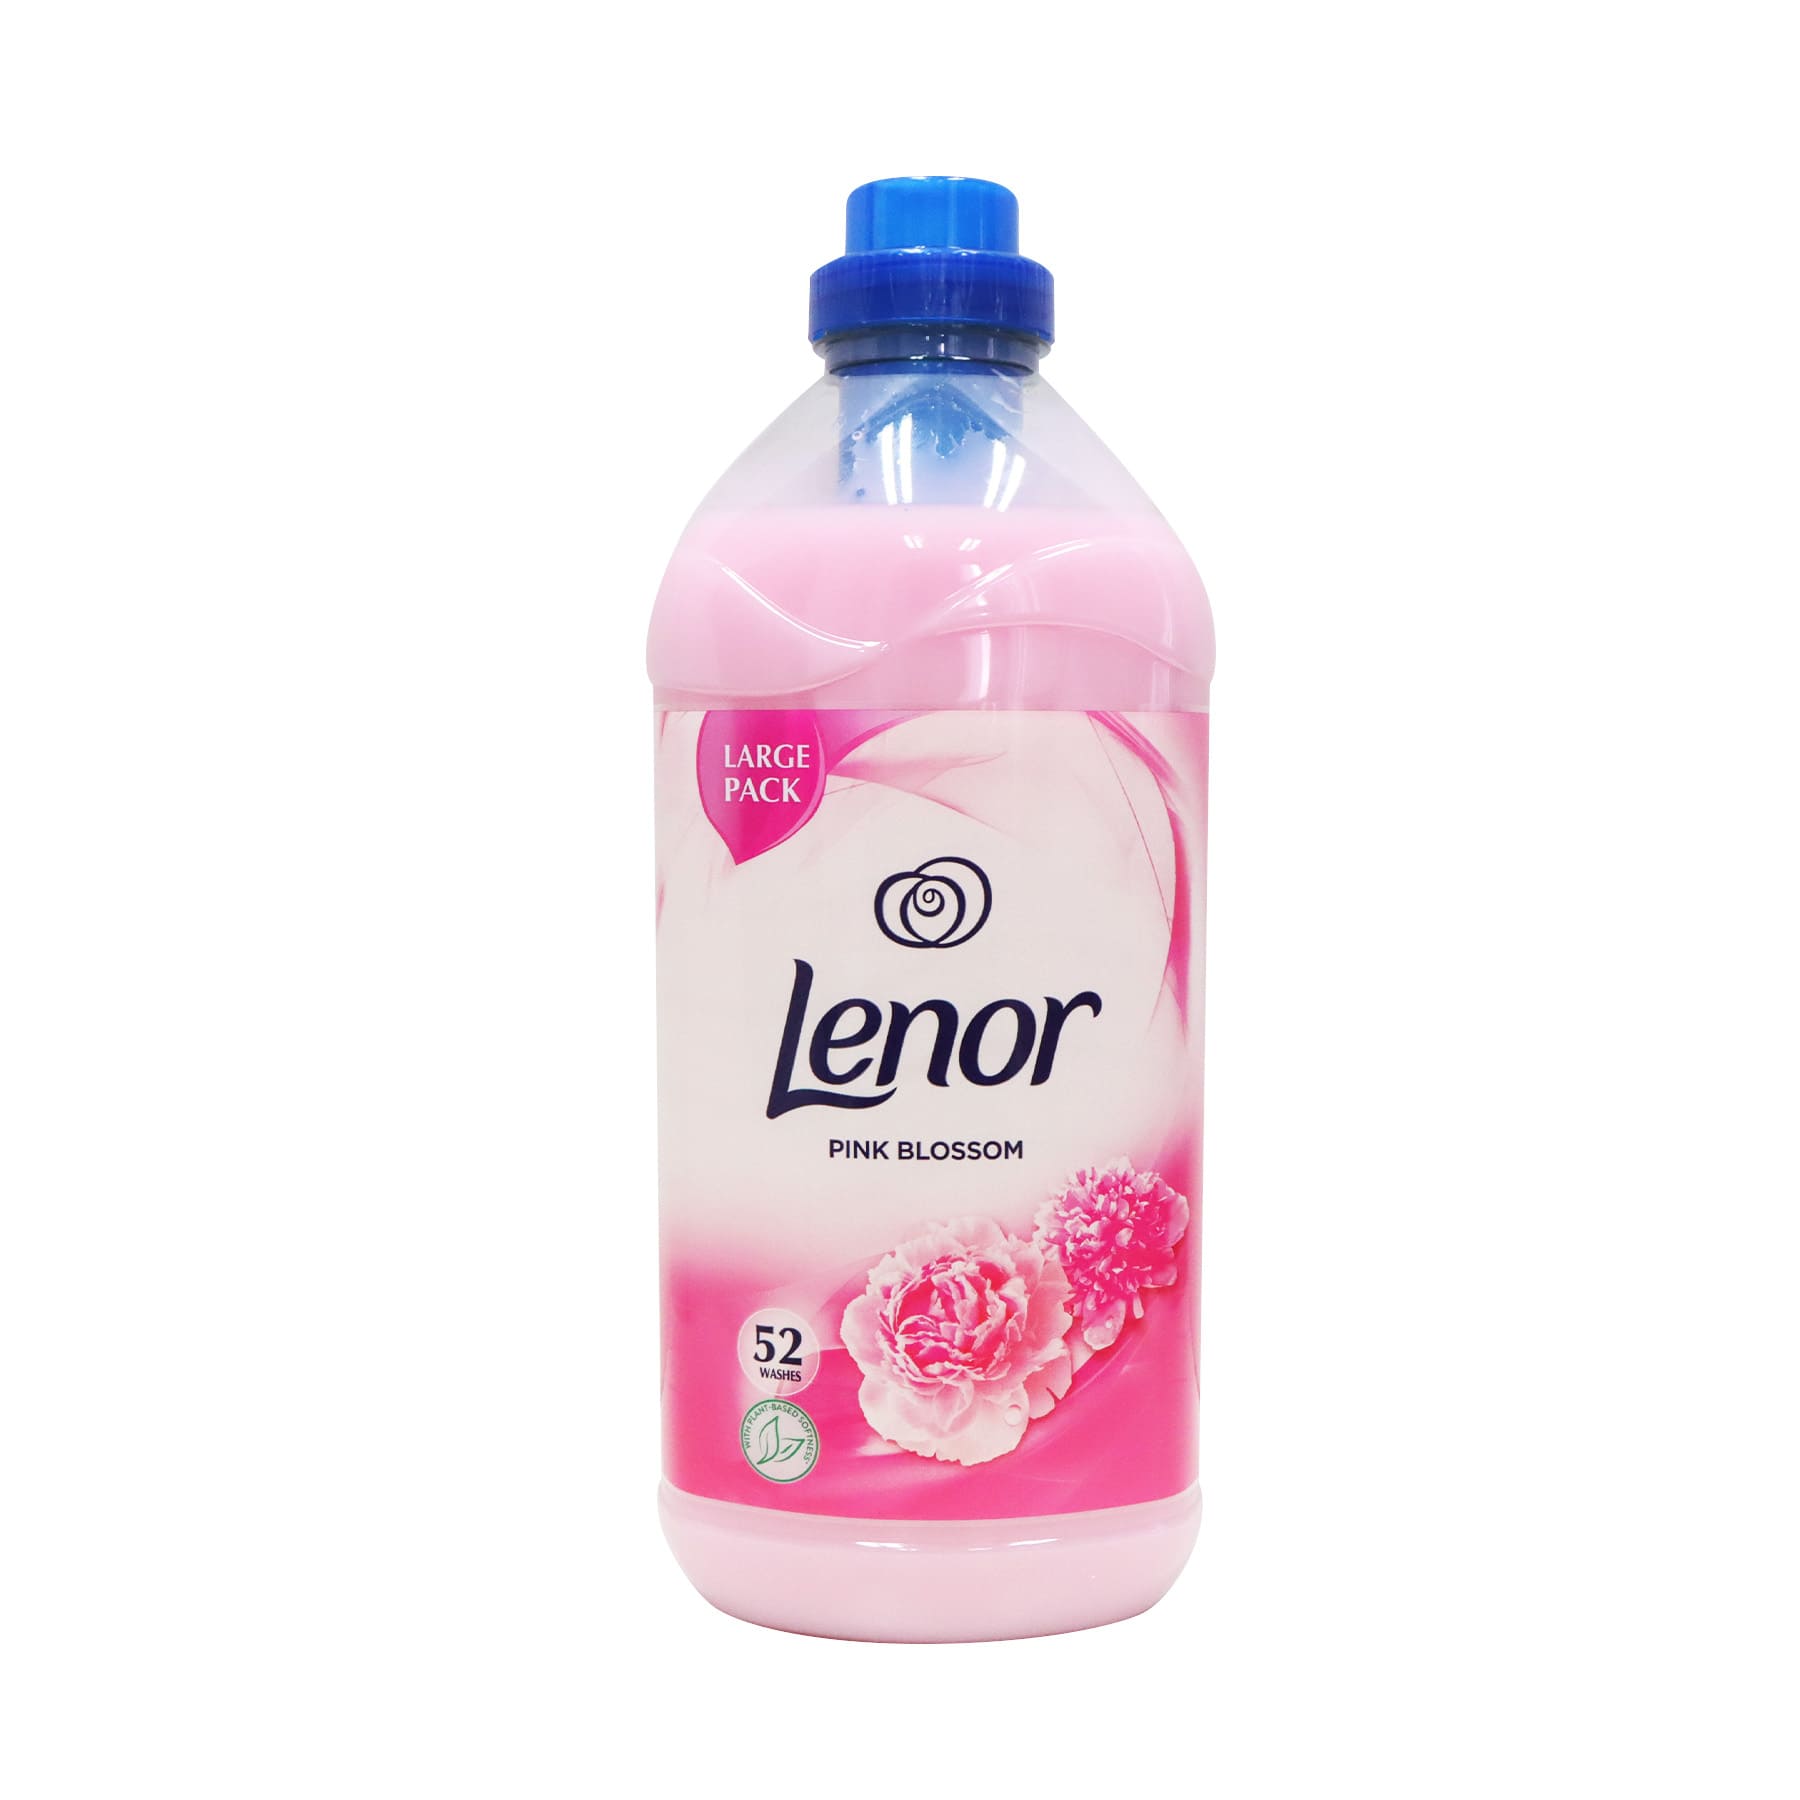 [P&G] Lenor 芳香衣物柔順劑 1.82公升 (甜美果香)